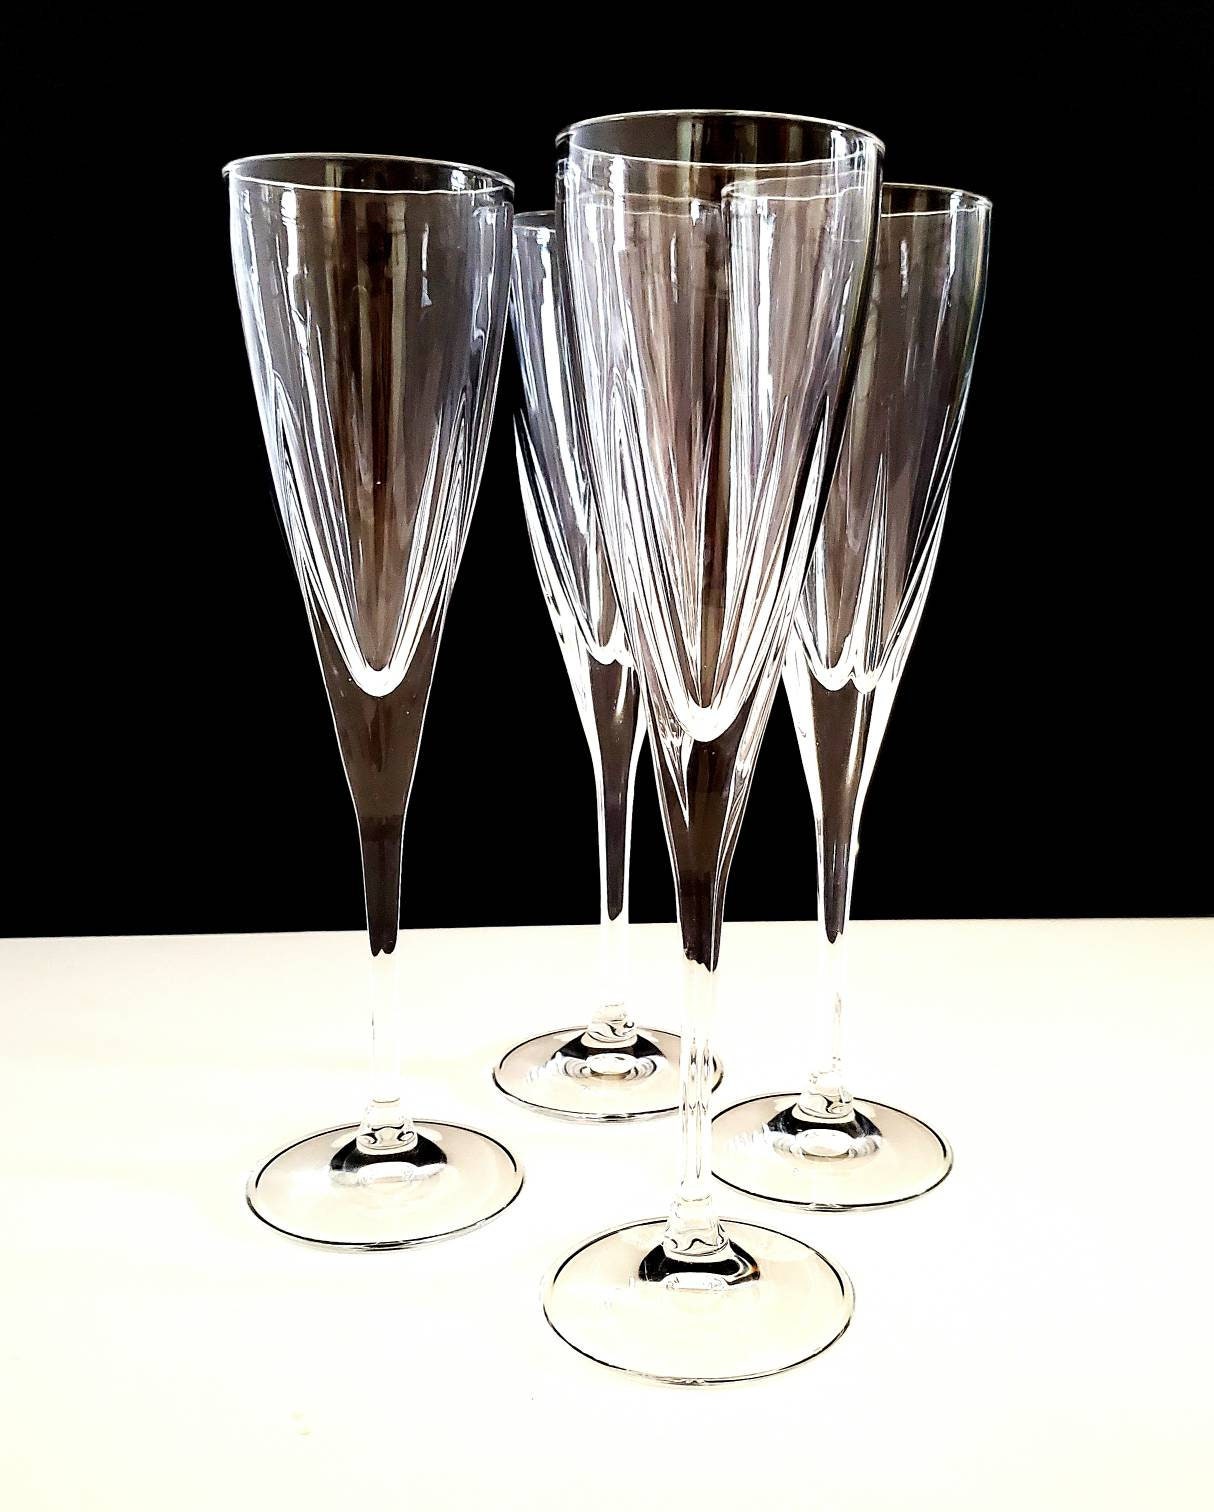 Godinger Dublin Crystal Champagne Flutes - Set of 4, 6 ounce